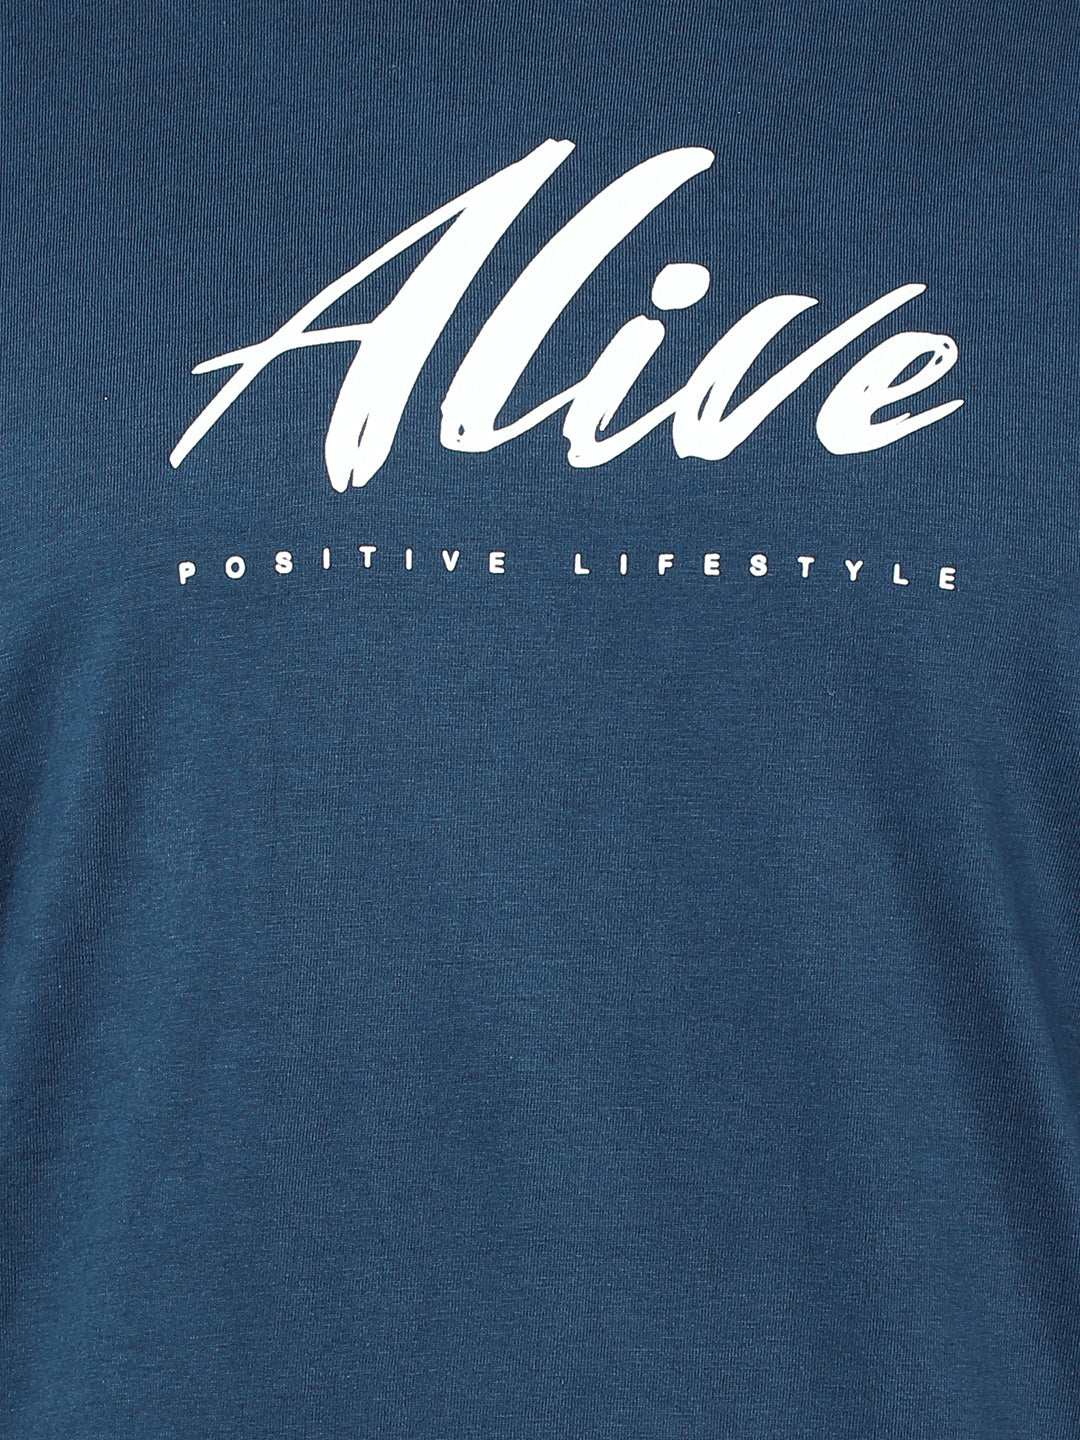 Tom's Alive - Printed Men's Tshirt - Blue Royale